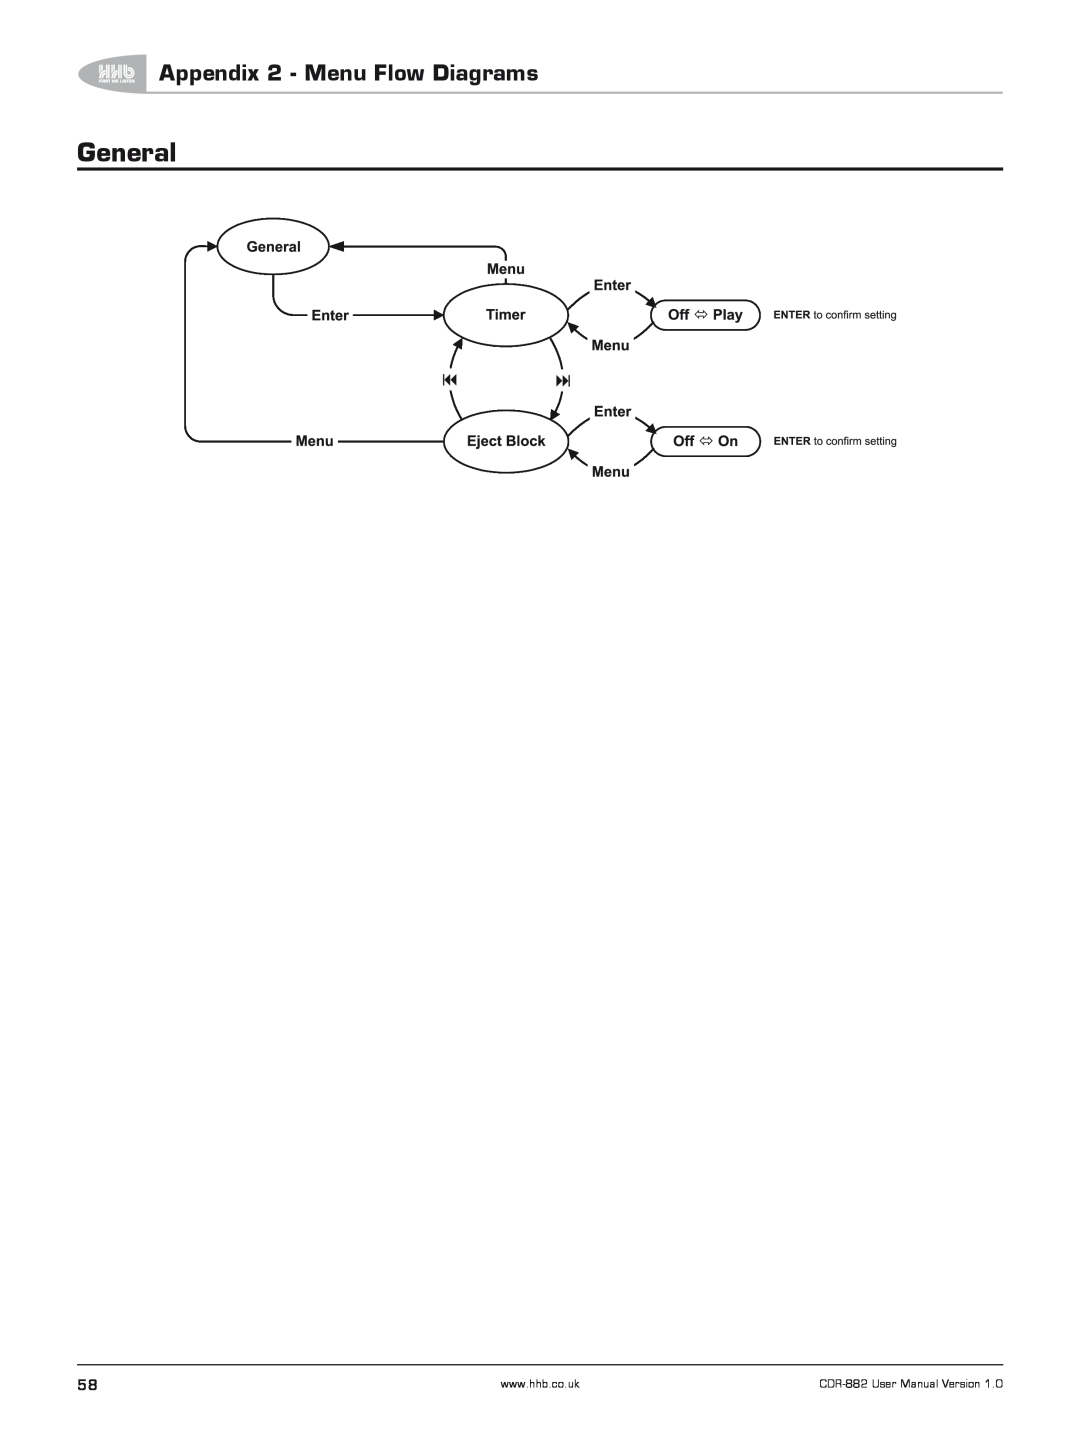 HHB comm CDR-882 user manual General, Appendix 2 - Menu Flow Diagrams 